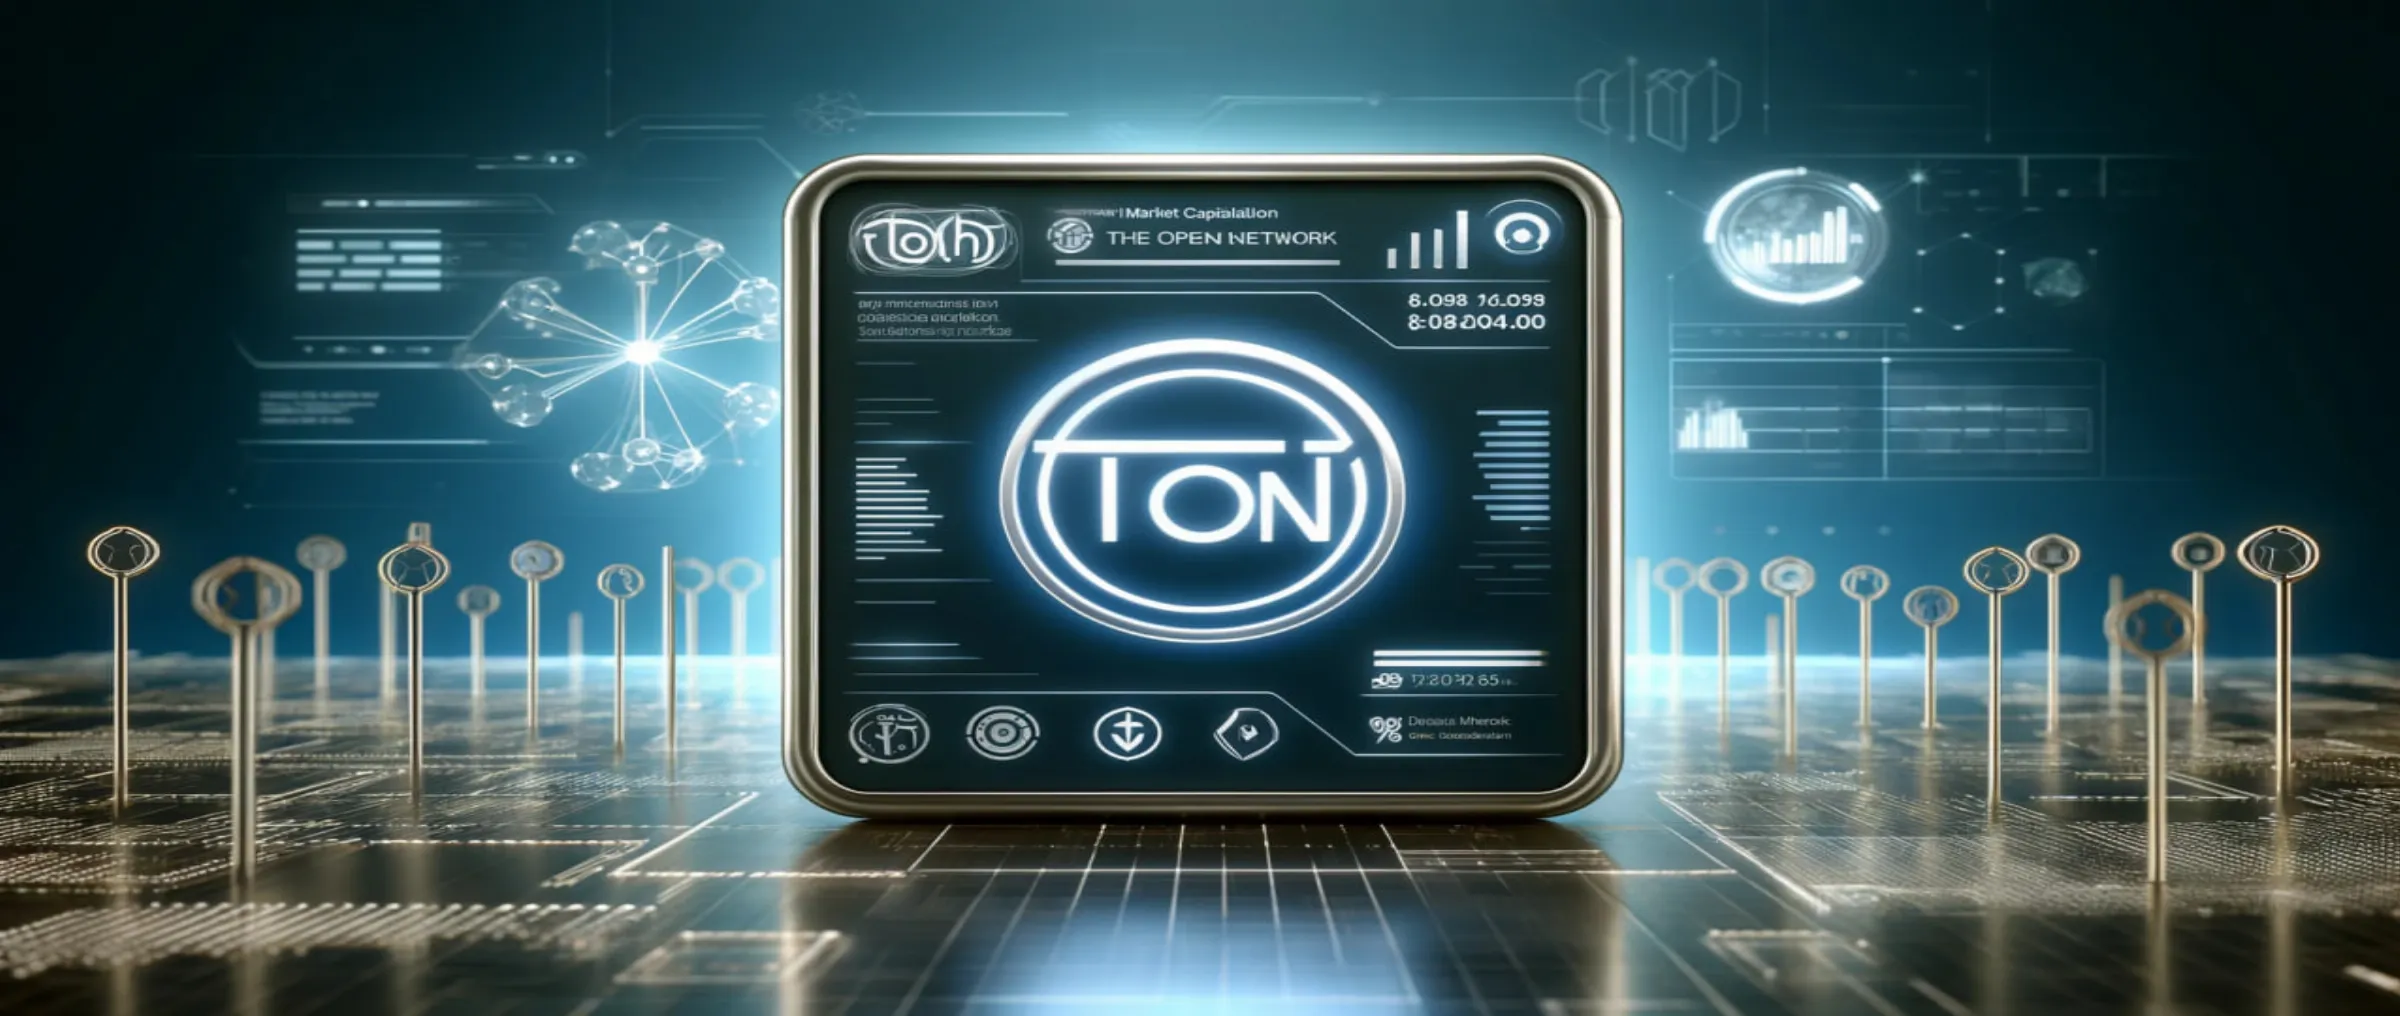 The TON blockchain set a new record, surpassing $600 million in TVL